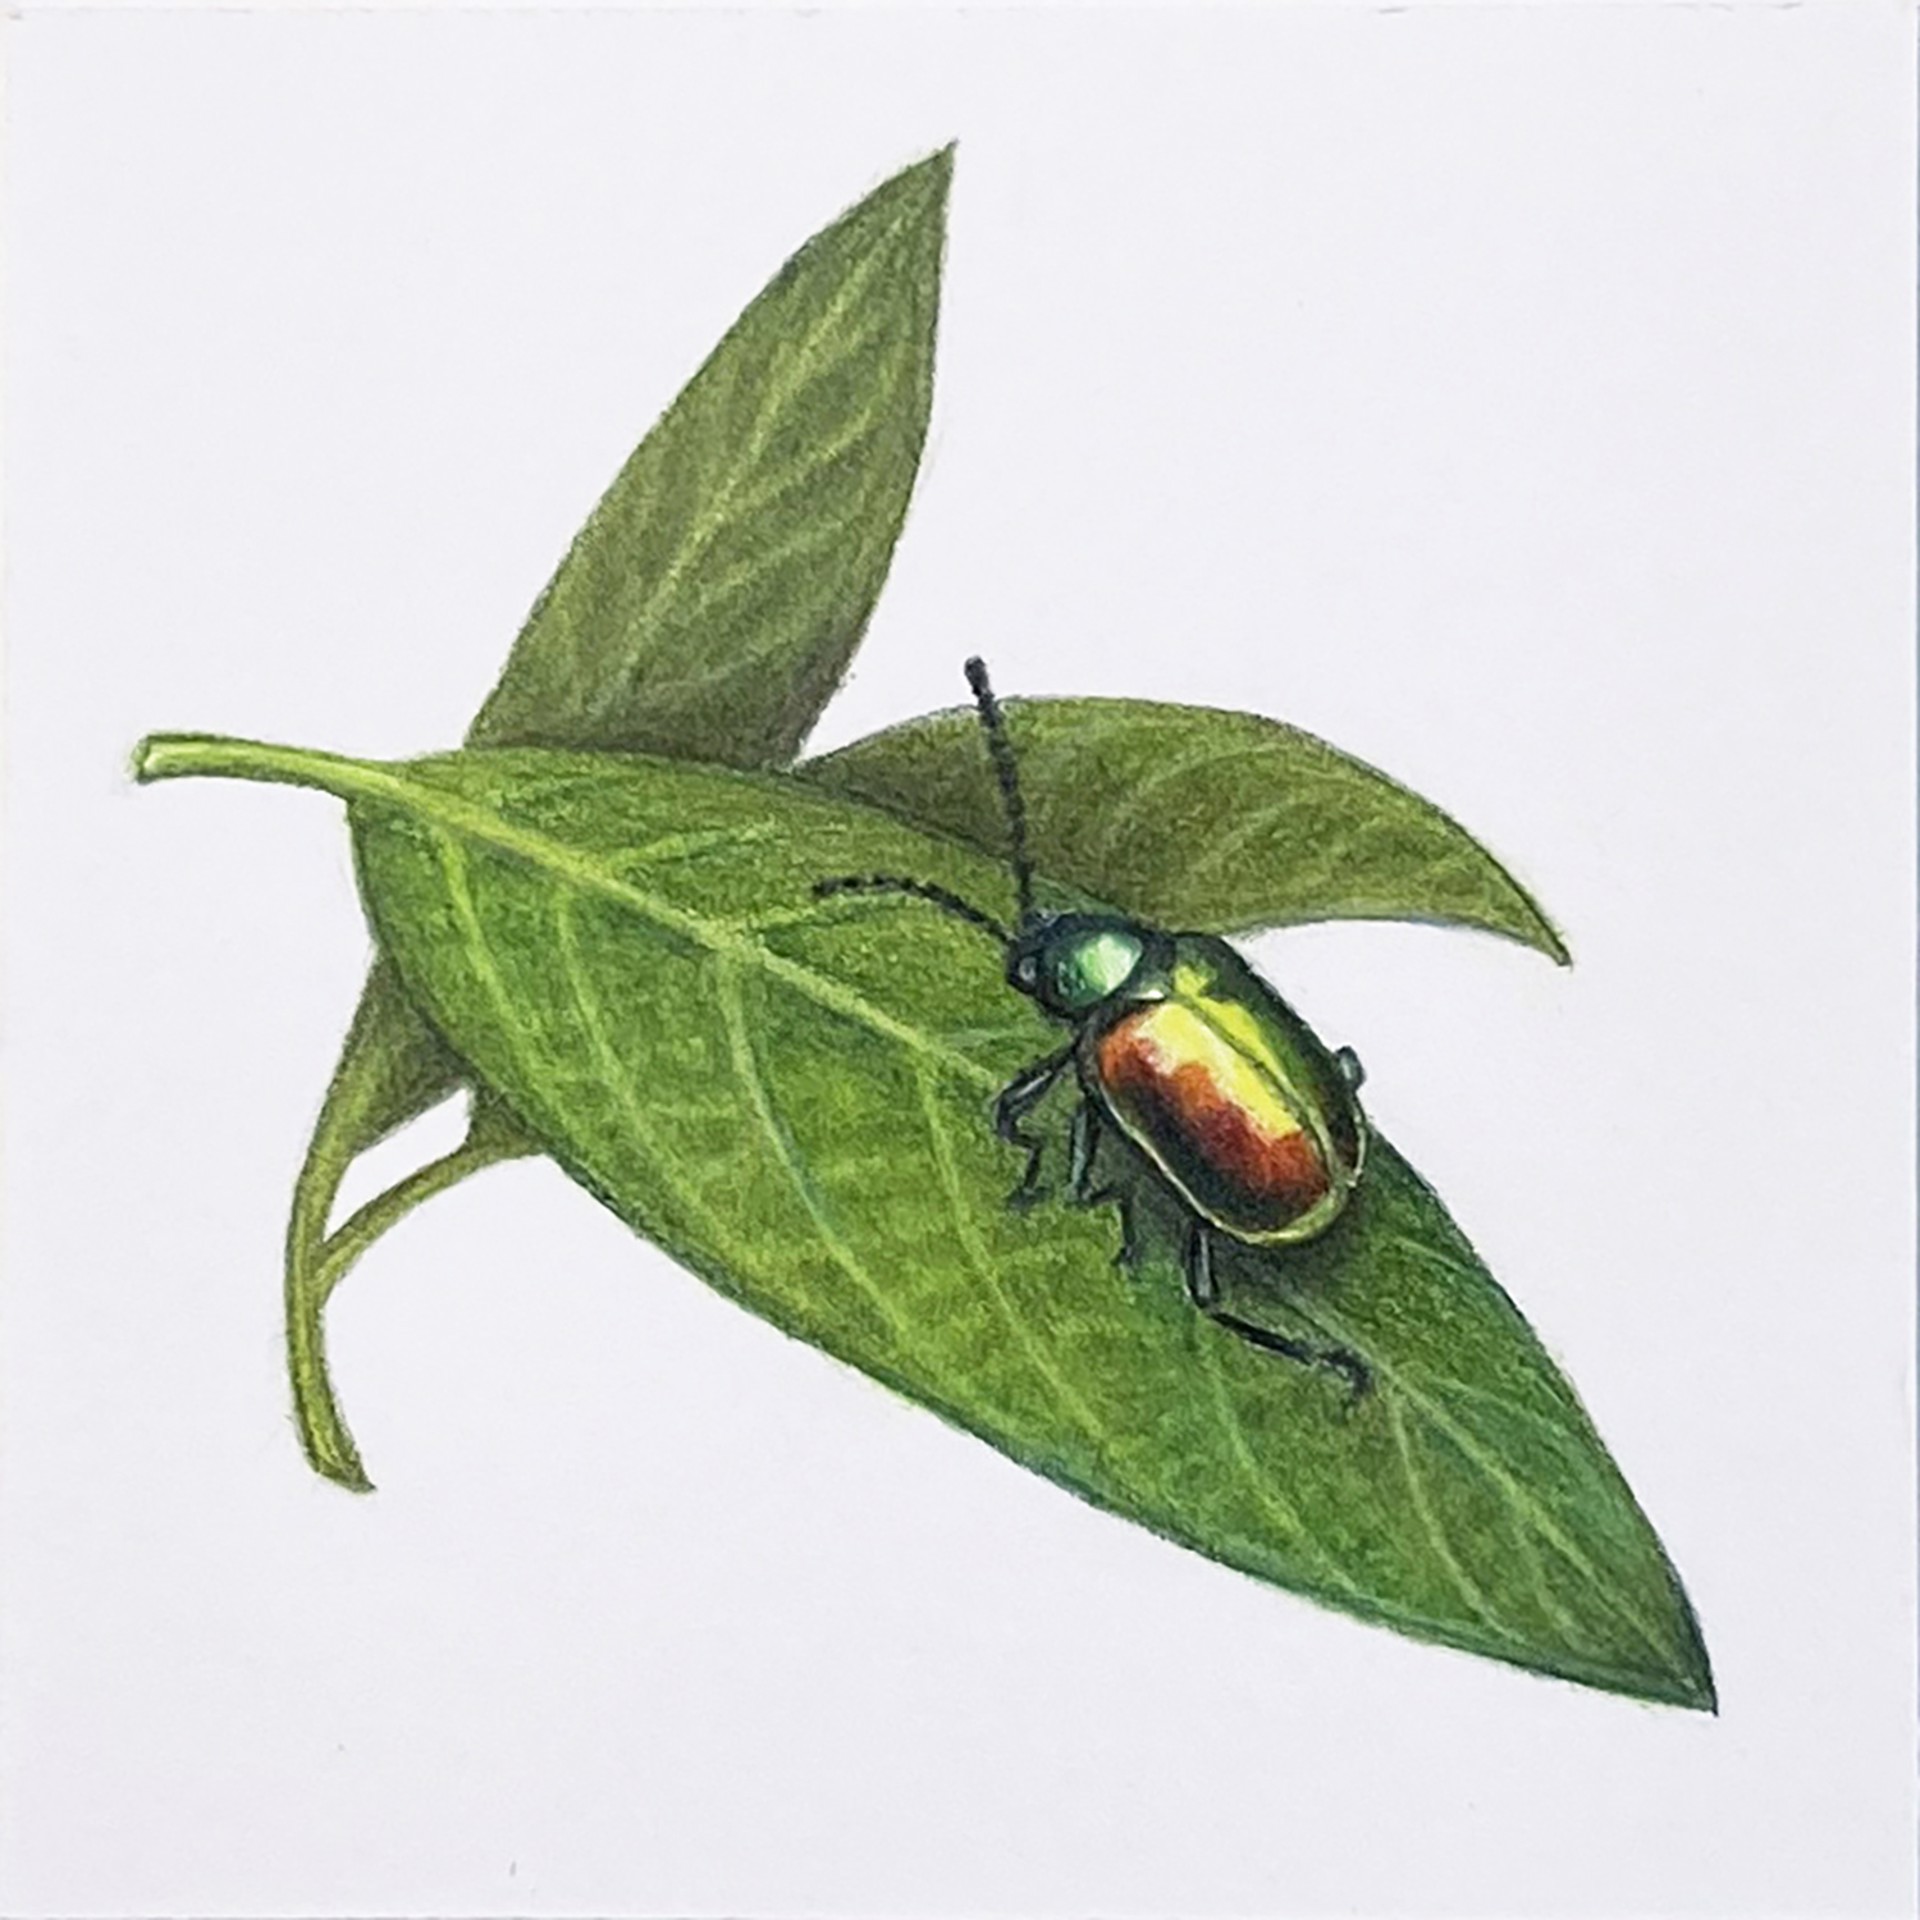 Dogbane Beetle by Hannah Hanlon